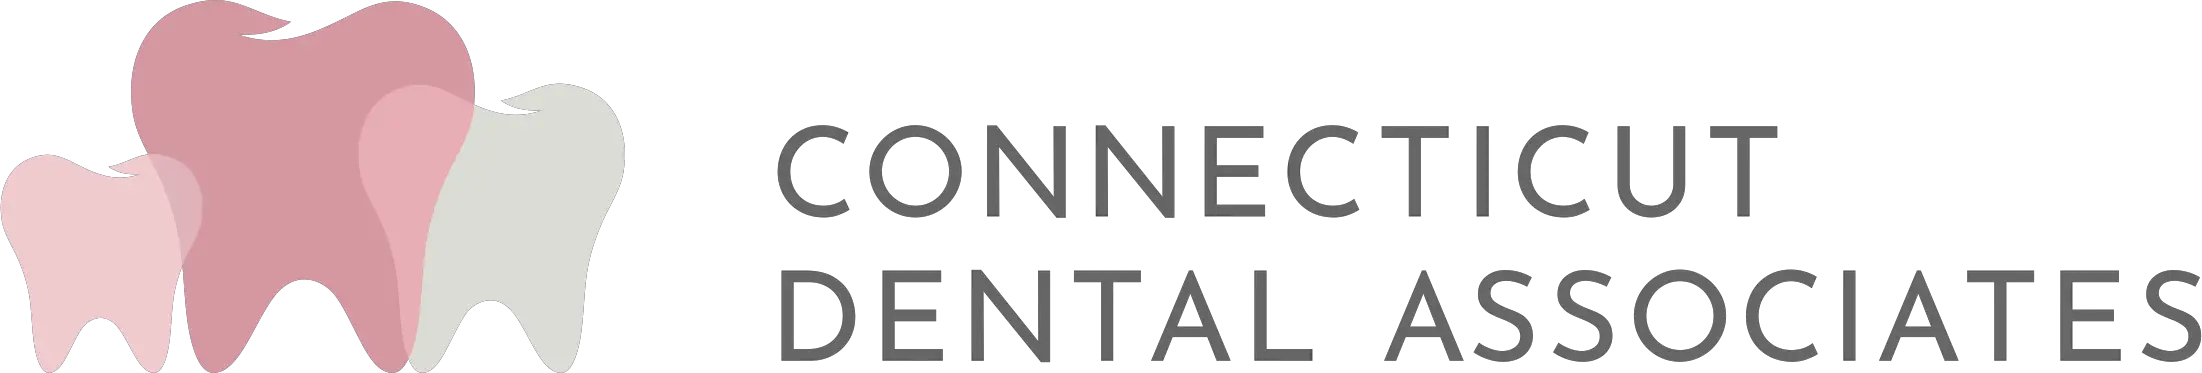 Company logo of Connecticut Dental Associates